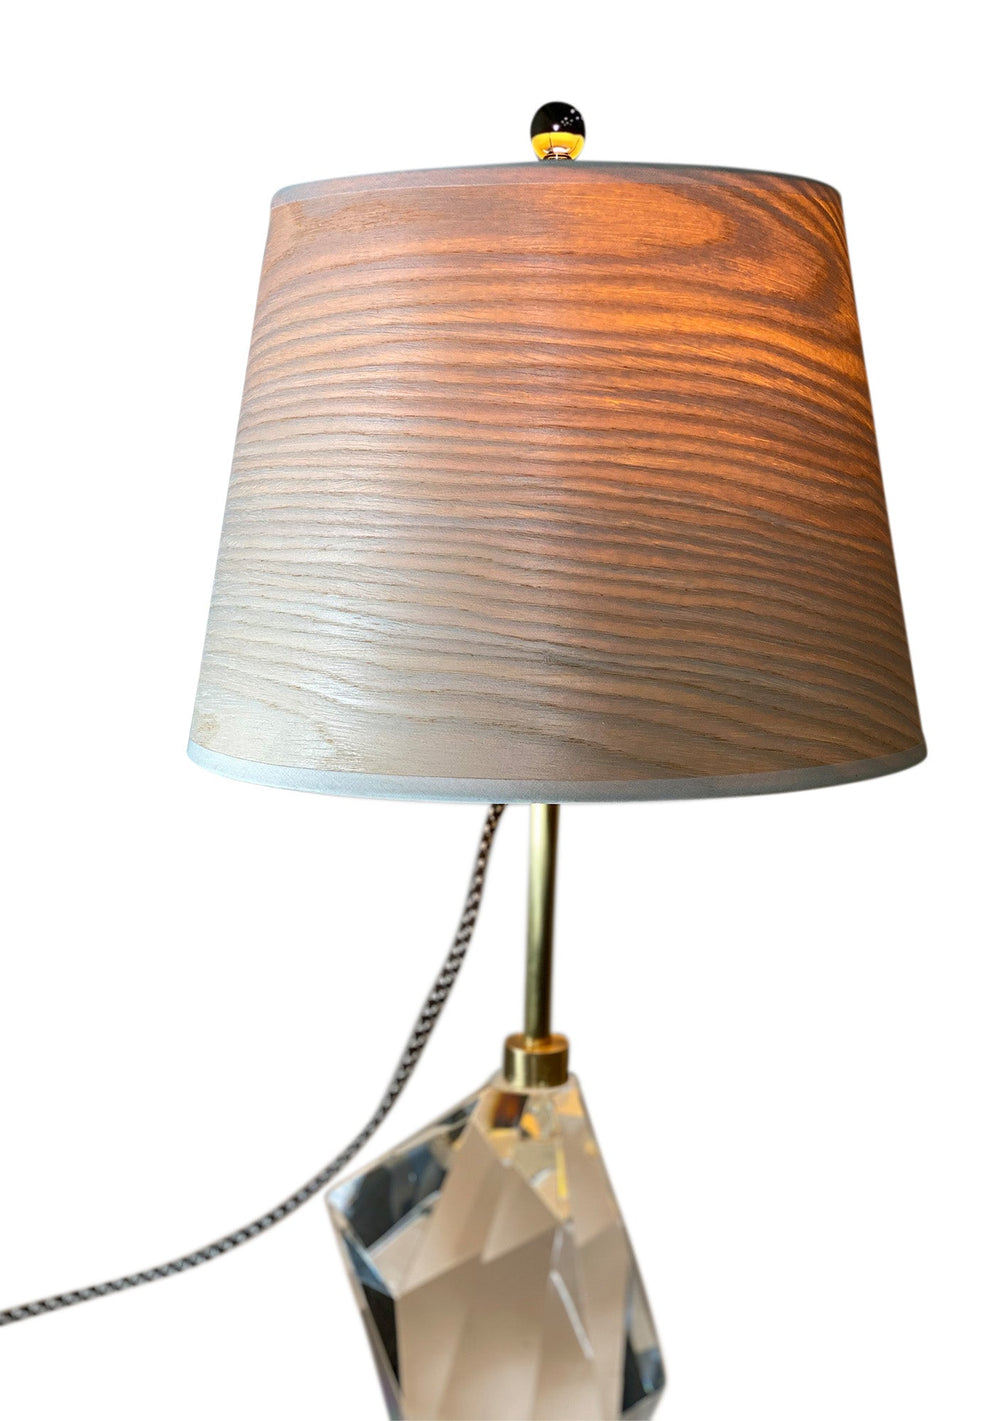 White Oak Wood Veneer Lamp Shade - 9" x 12" x 9" - Lux Lamp Shades